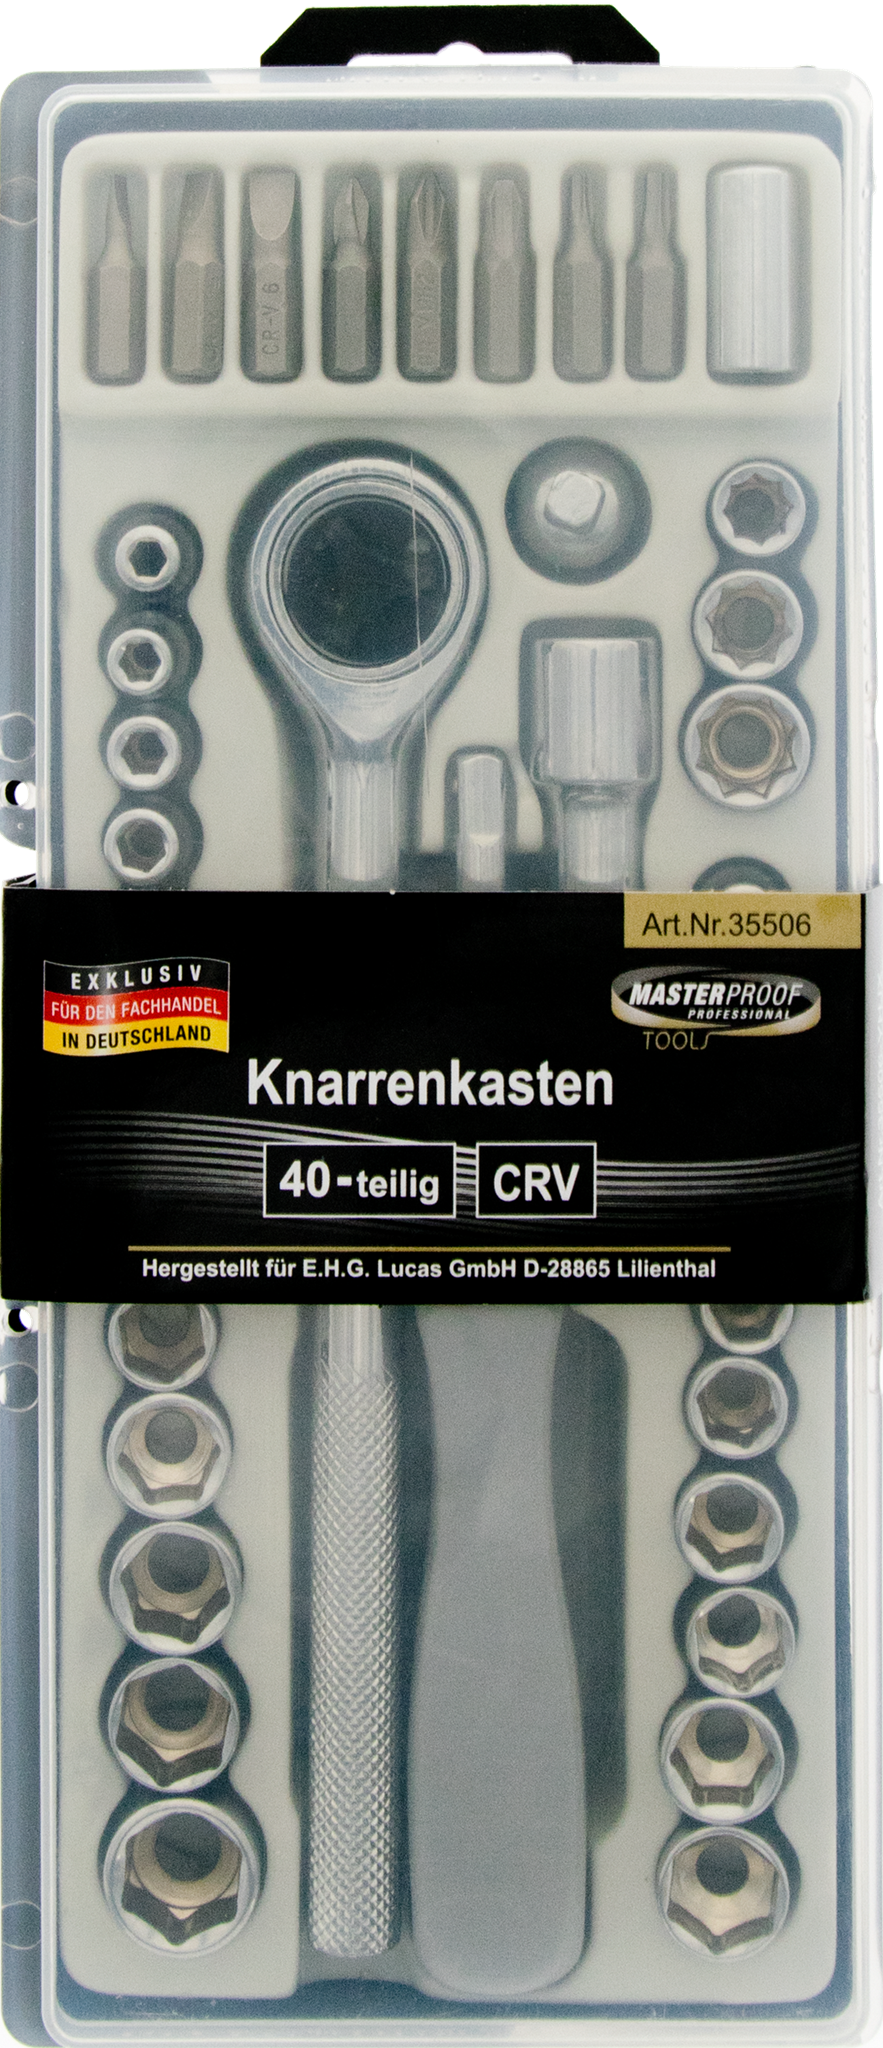 Picture of Knarrenkasten